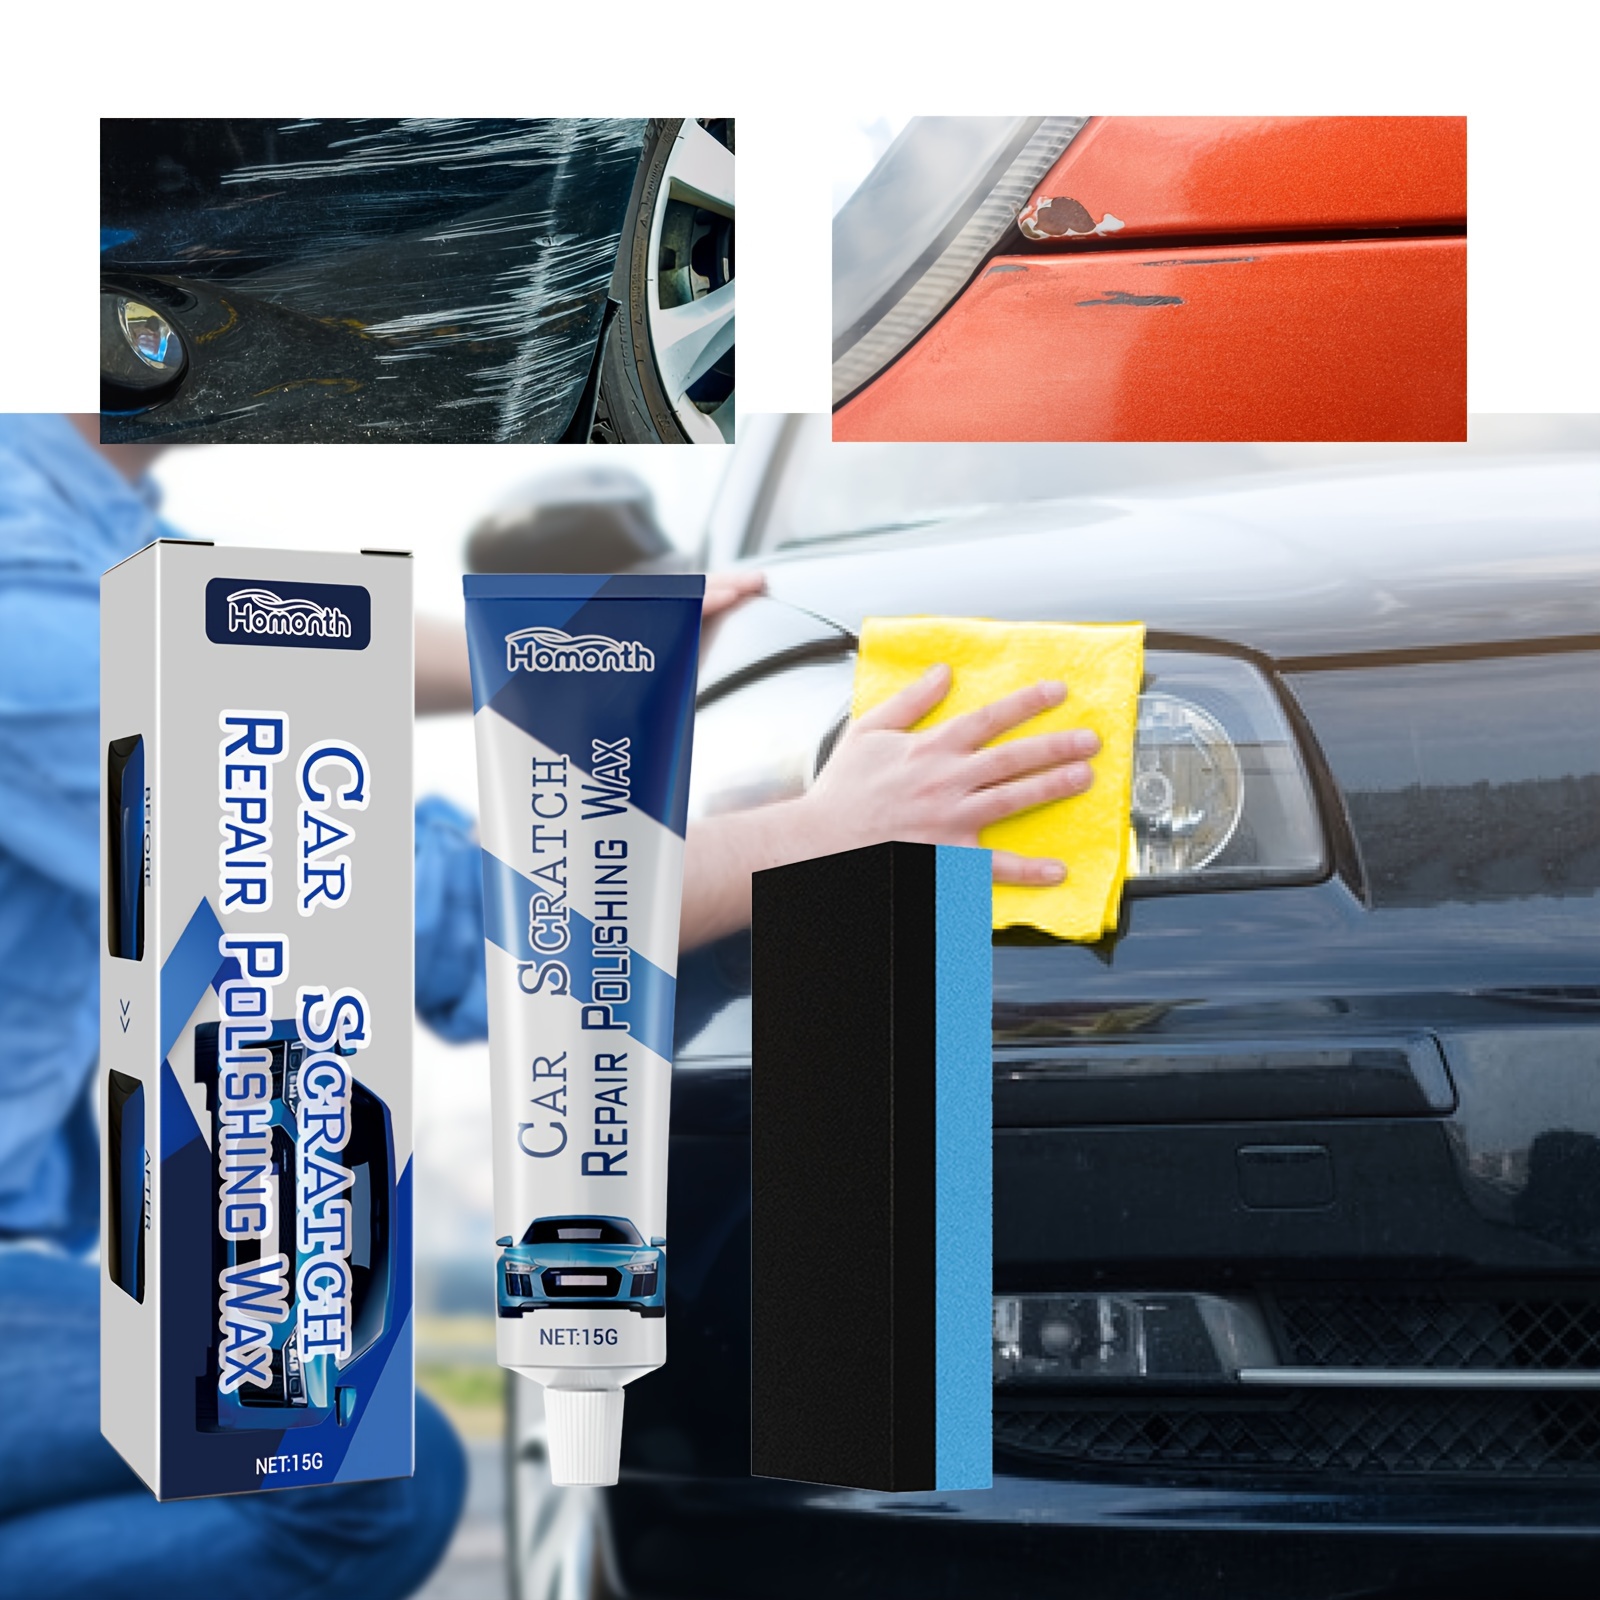 Cleanit Car Scratch Repair Kit - Online Low Prices - Molooco Shop